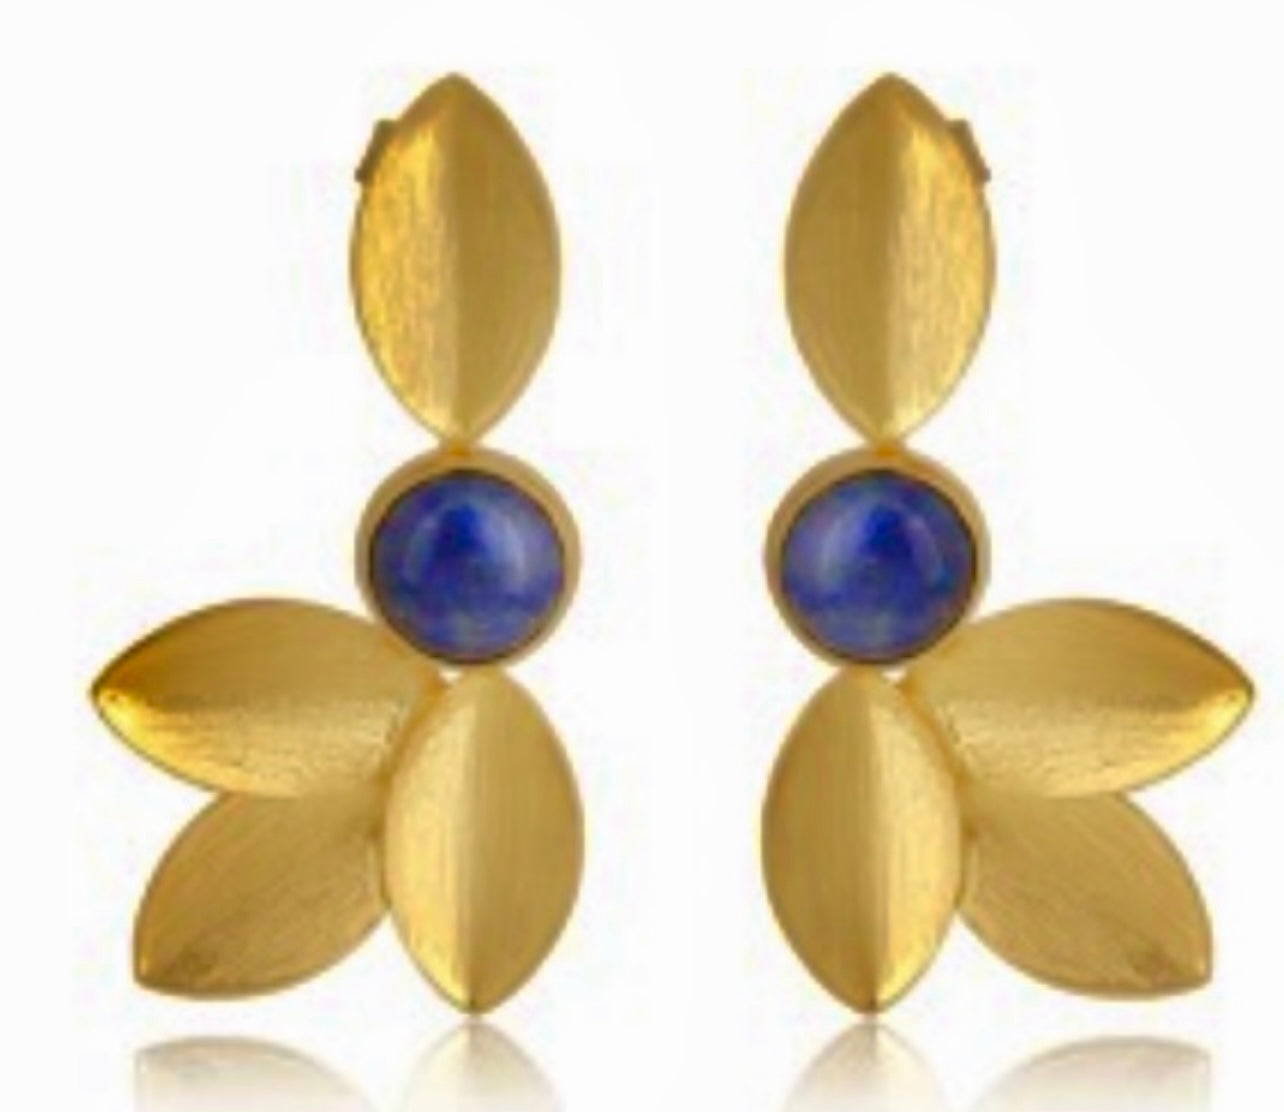 Lapis Lazuli Gemstone Leaf Design 22k Brushed Gold Vermeil Statement Earrings 2"